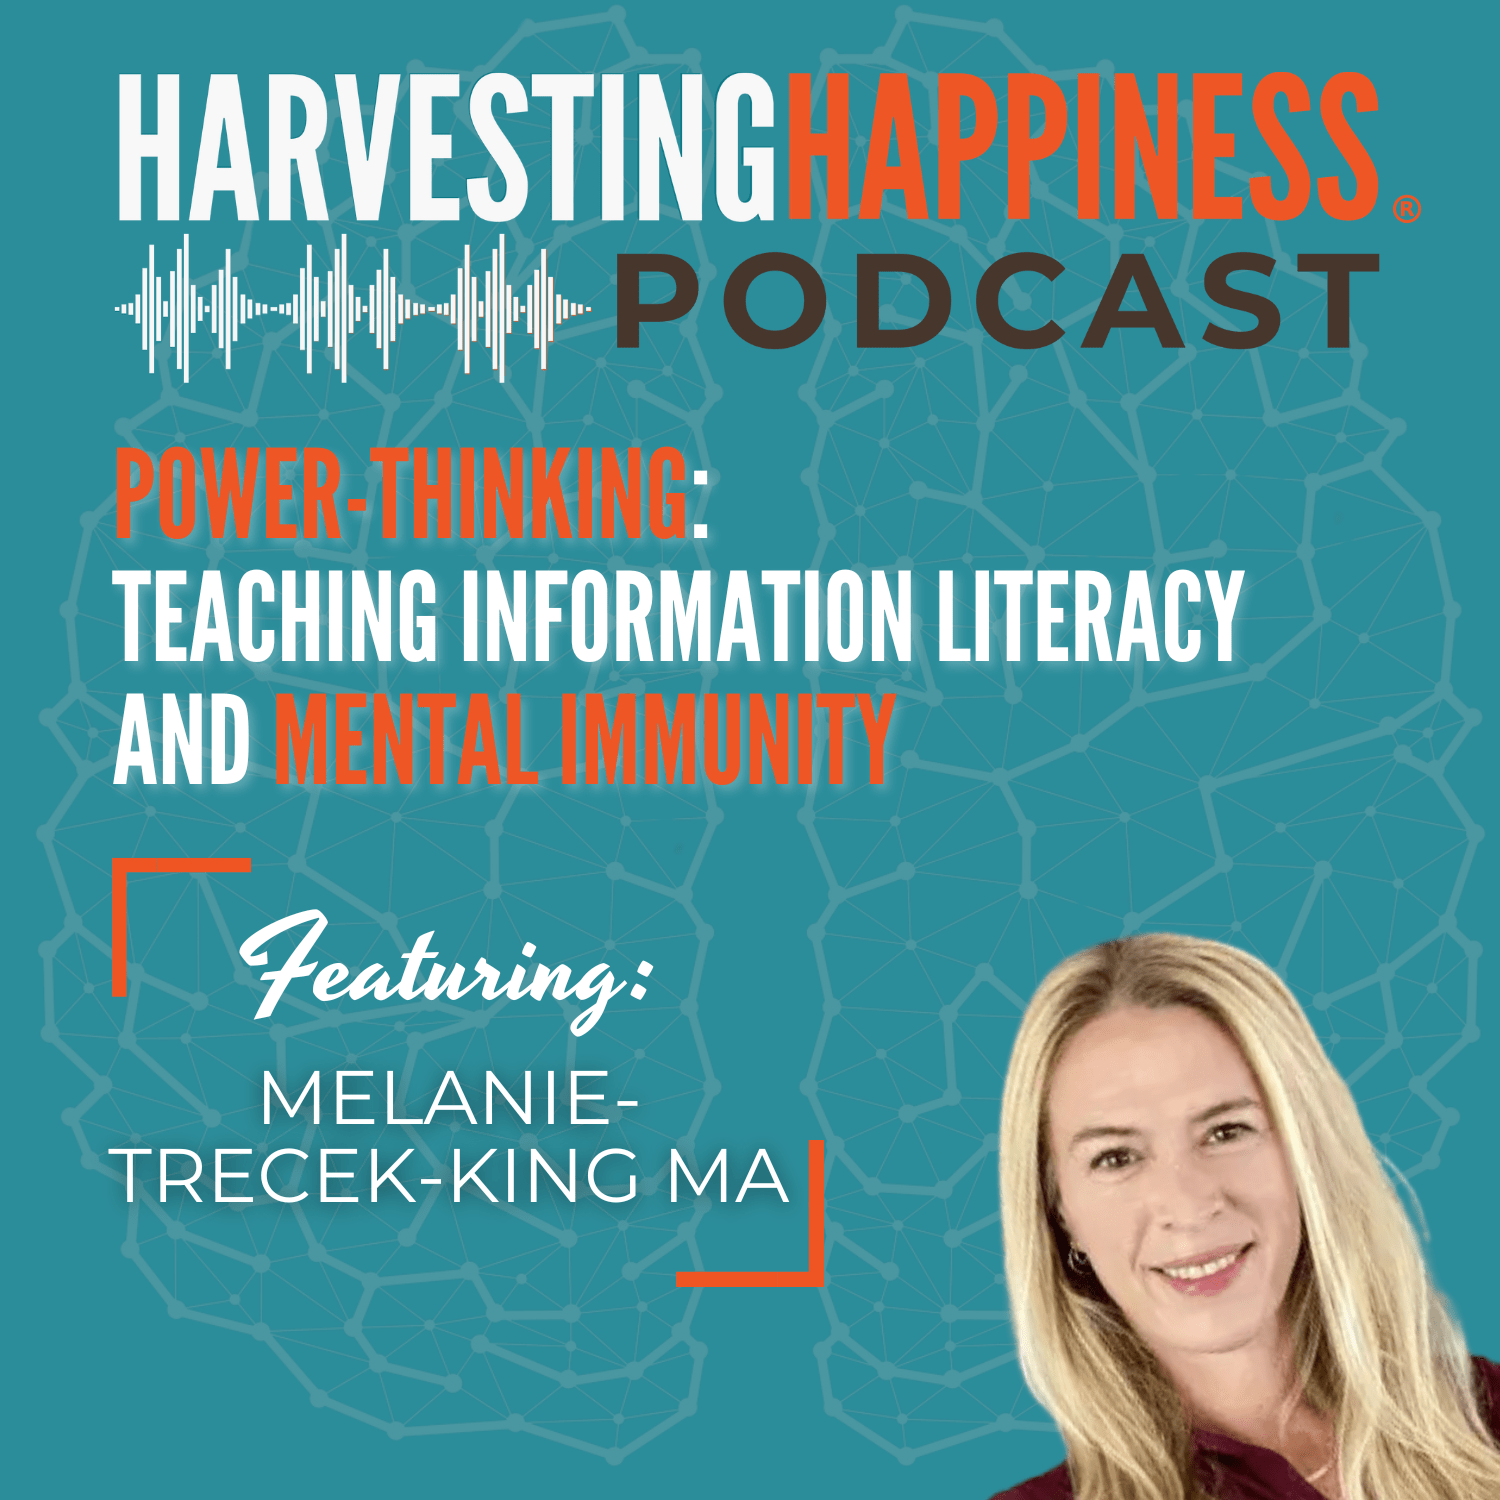 Power-Thinking: Teaching Information Literacy and Mental Immunity with Melanie Trecek-King MA